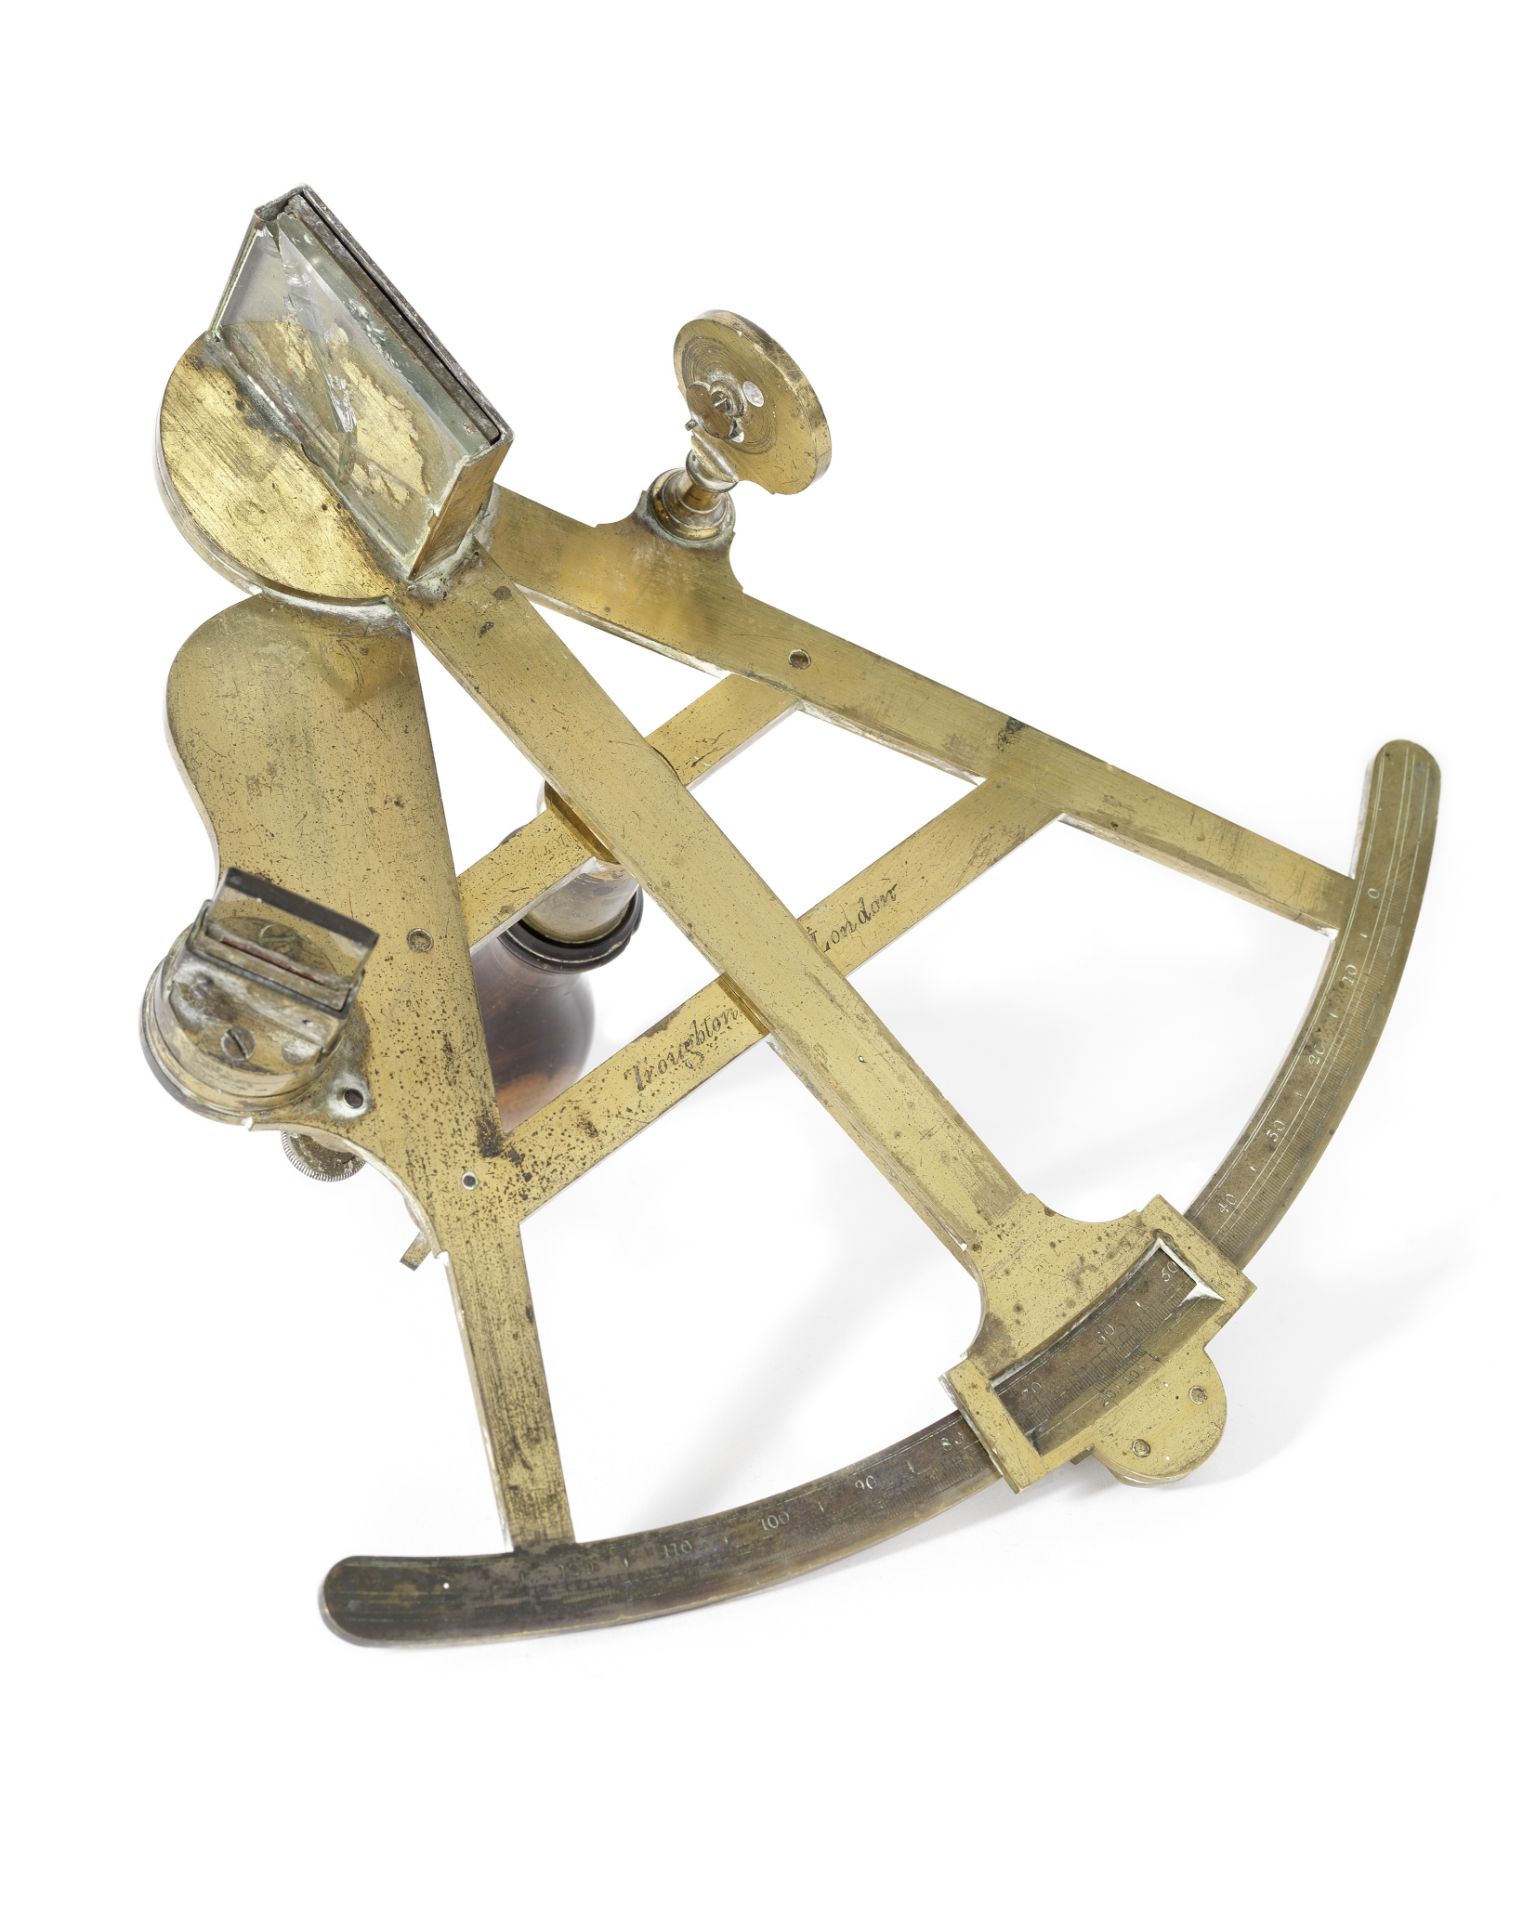 An Edward Troughton small size brass sextant, English, circa 1820,